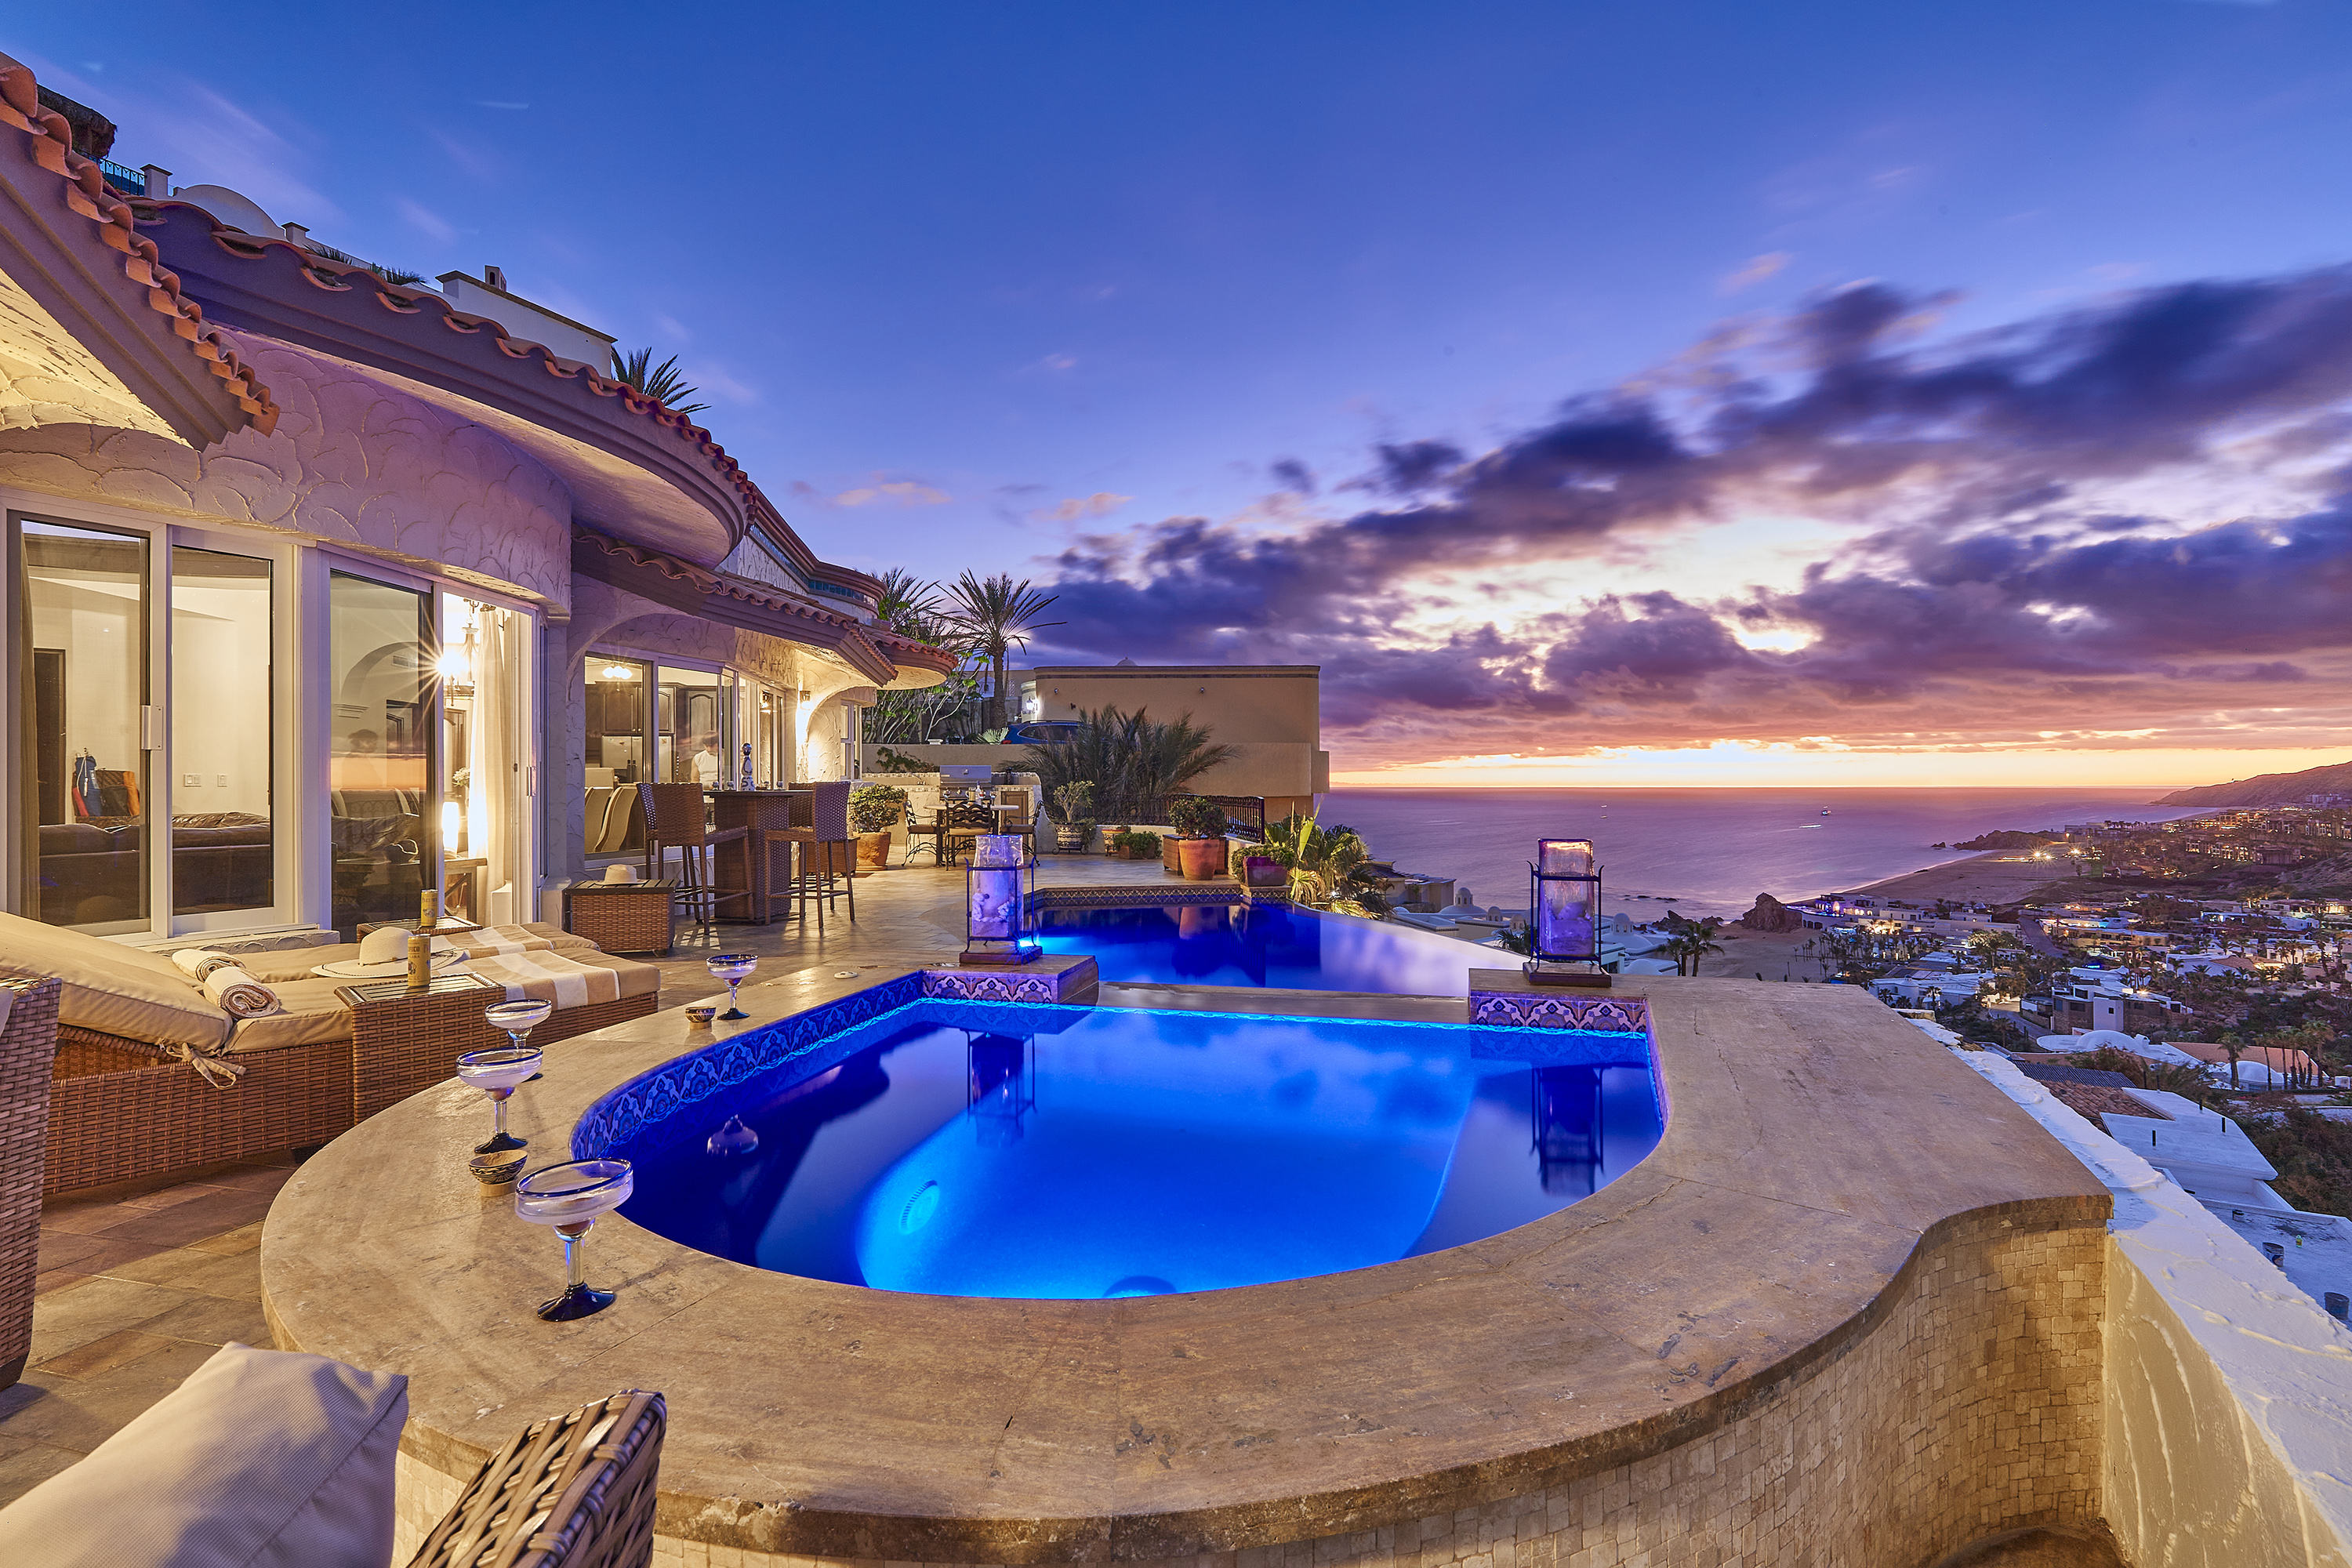 Jacuzzi and infinity pool overlooking incredible ocean views